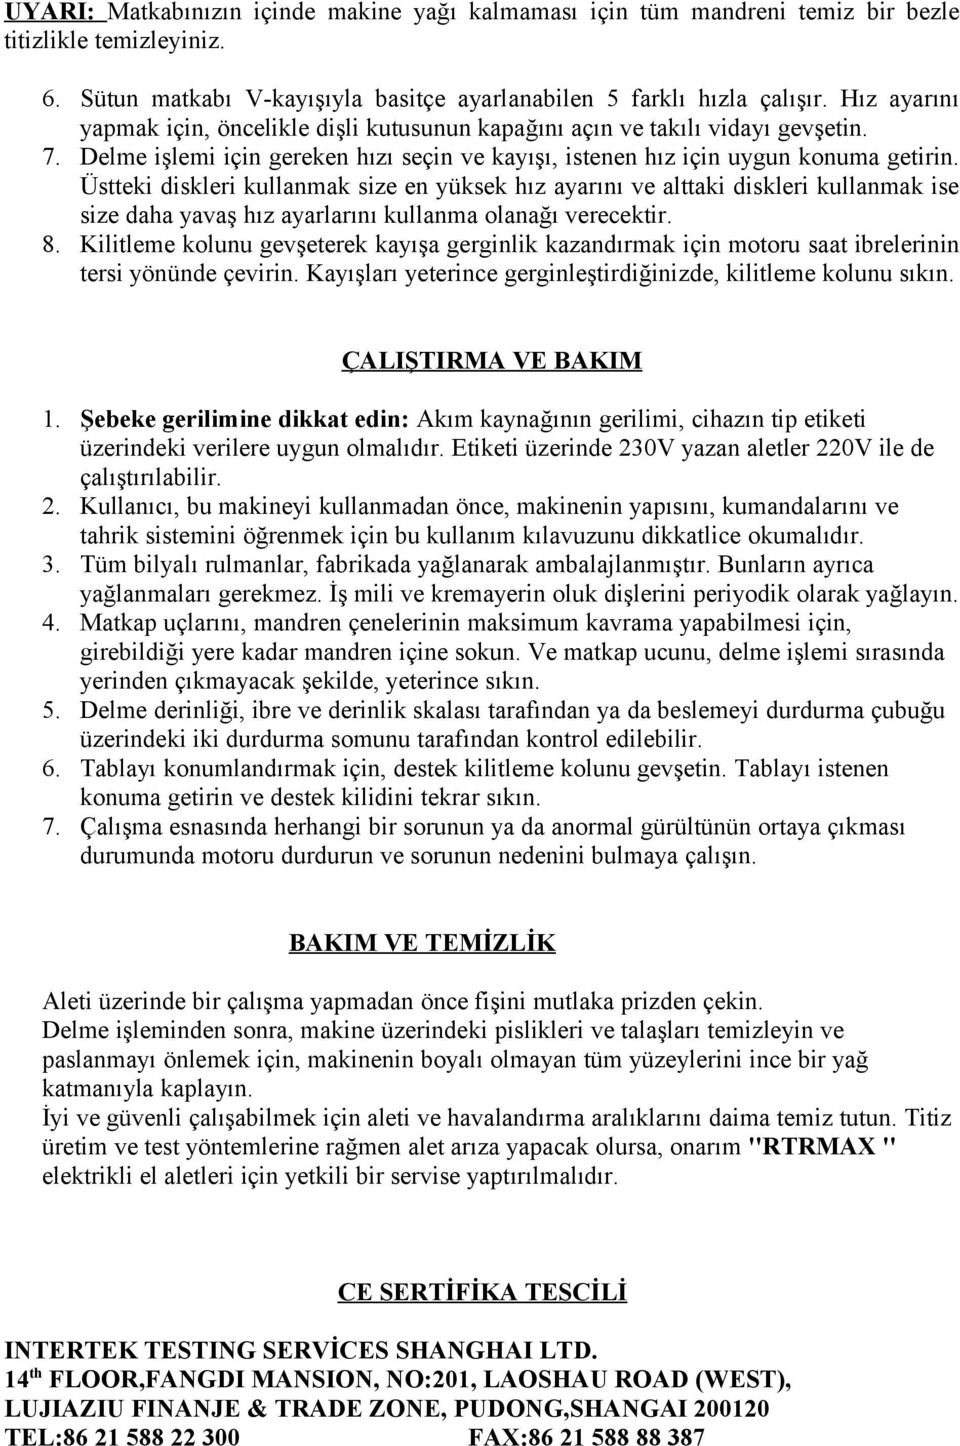 SÜTUNLU MATKAP MODEL RTM613 TANITMA VE KULLANIM KLAVUZU - PDF Free Download